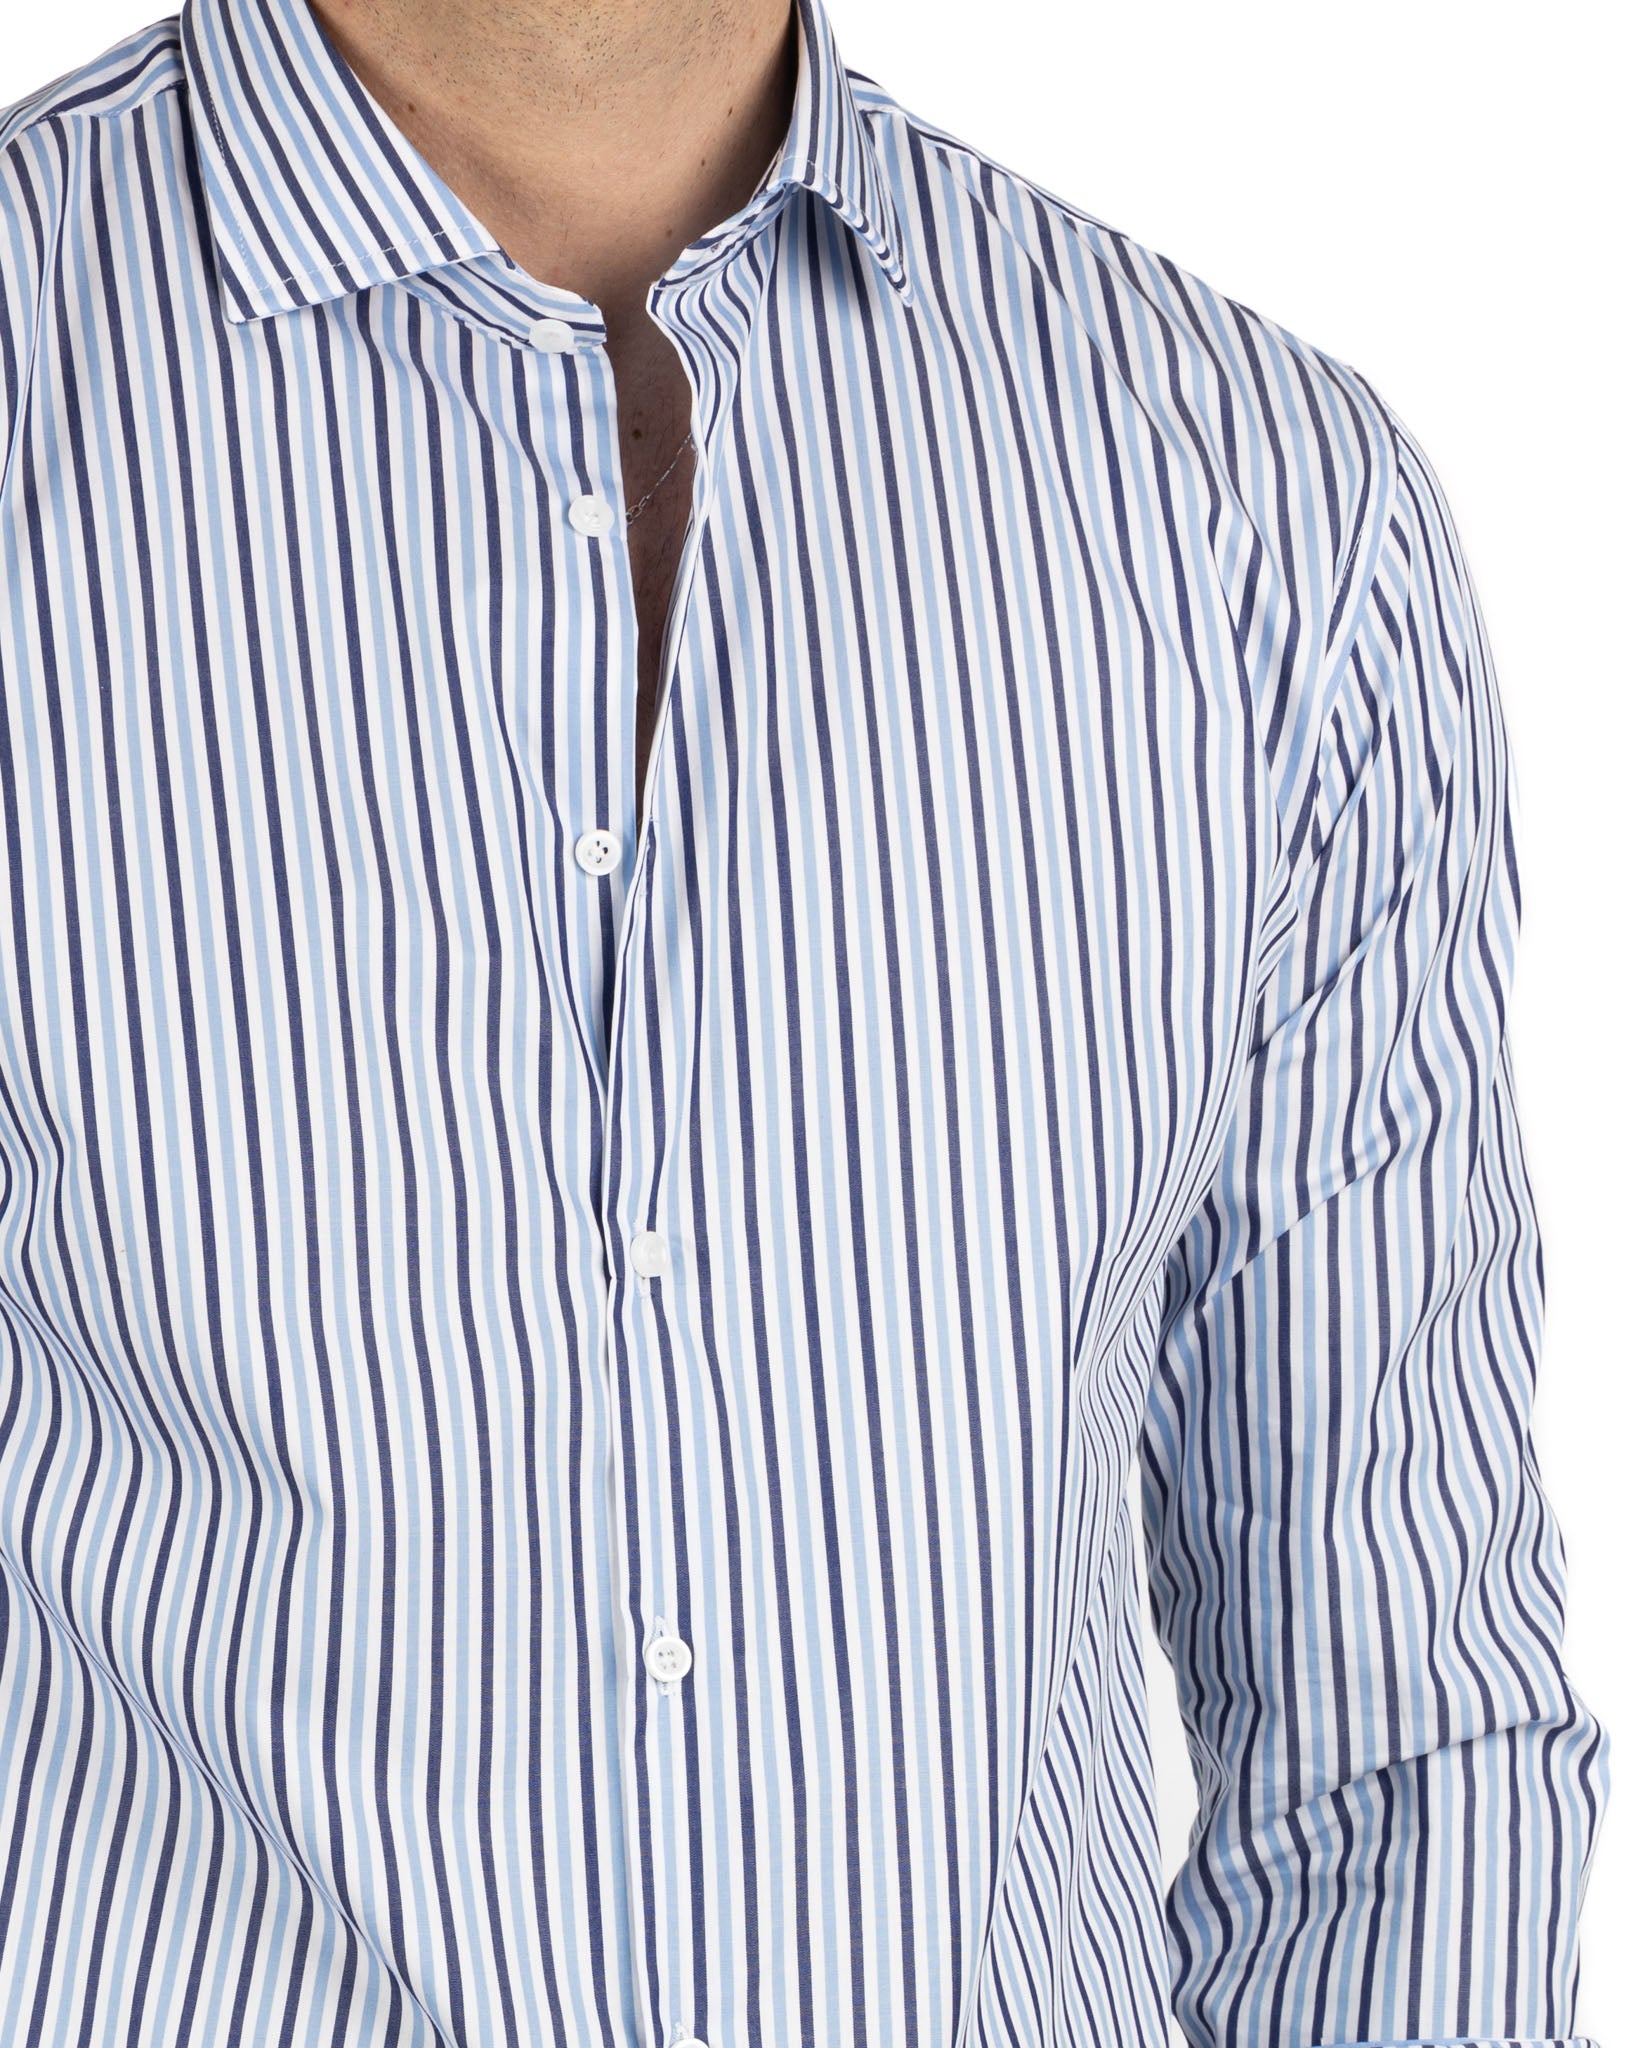 Shirt - slim fit light blue and blue stripes